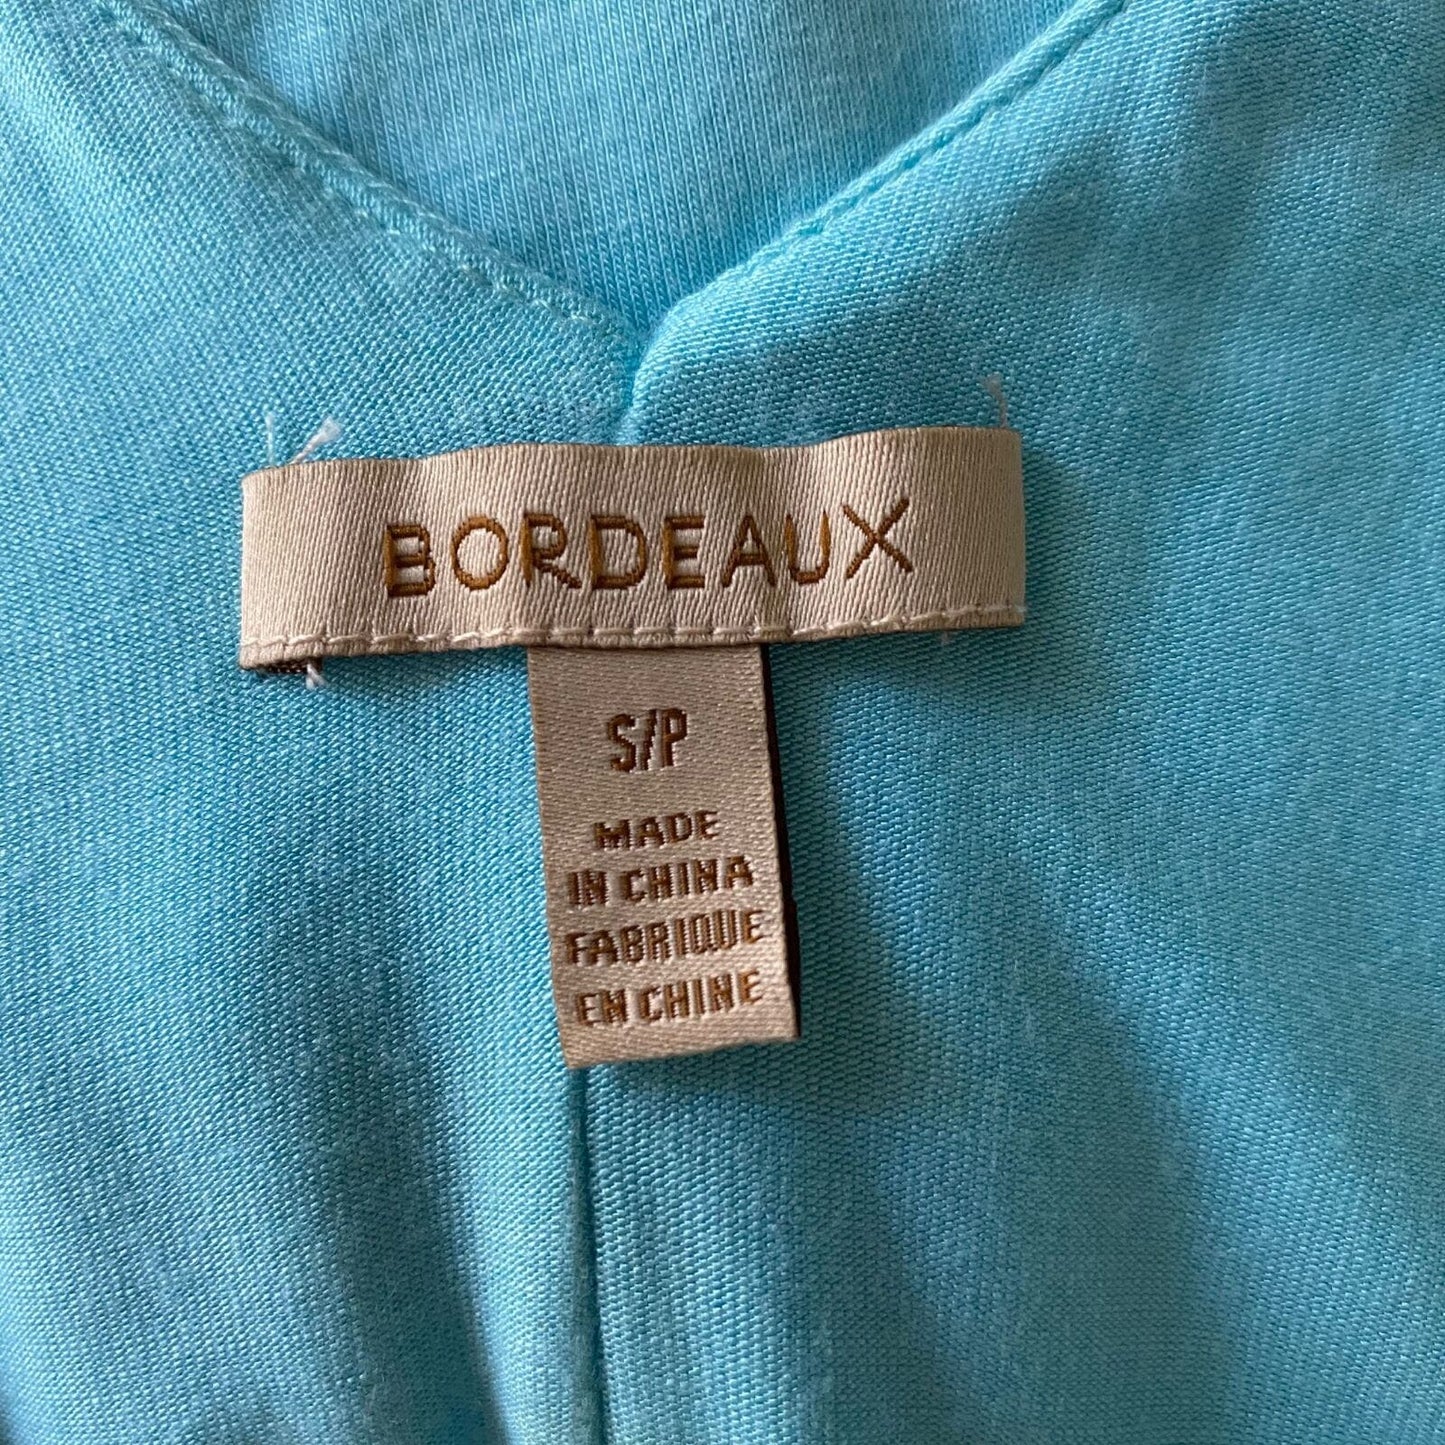 Anthropologie Bordeaux sz S Sleeveless V-neck tunic tank top blouse